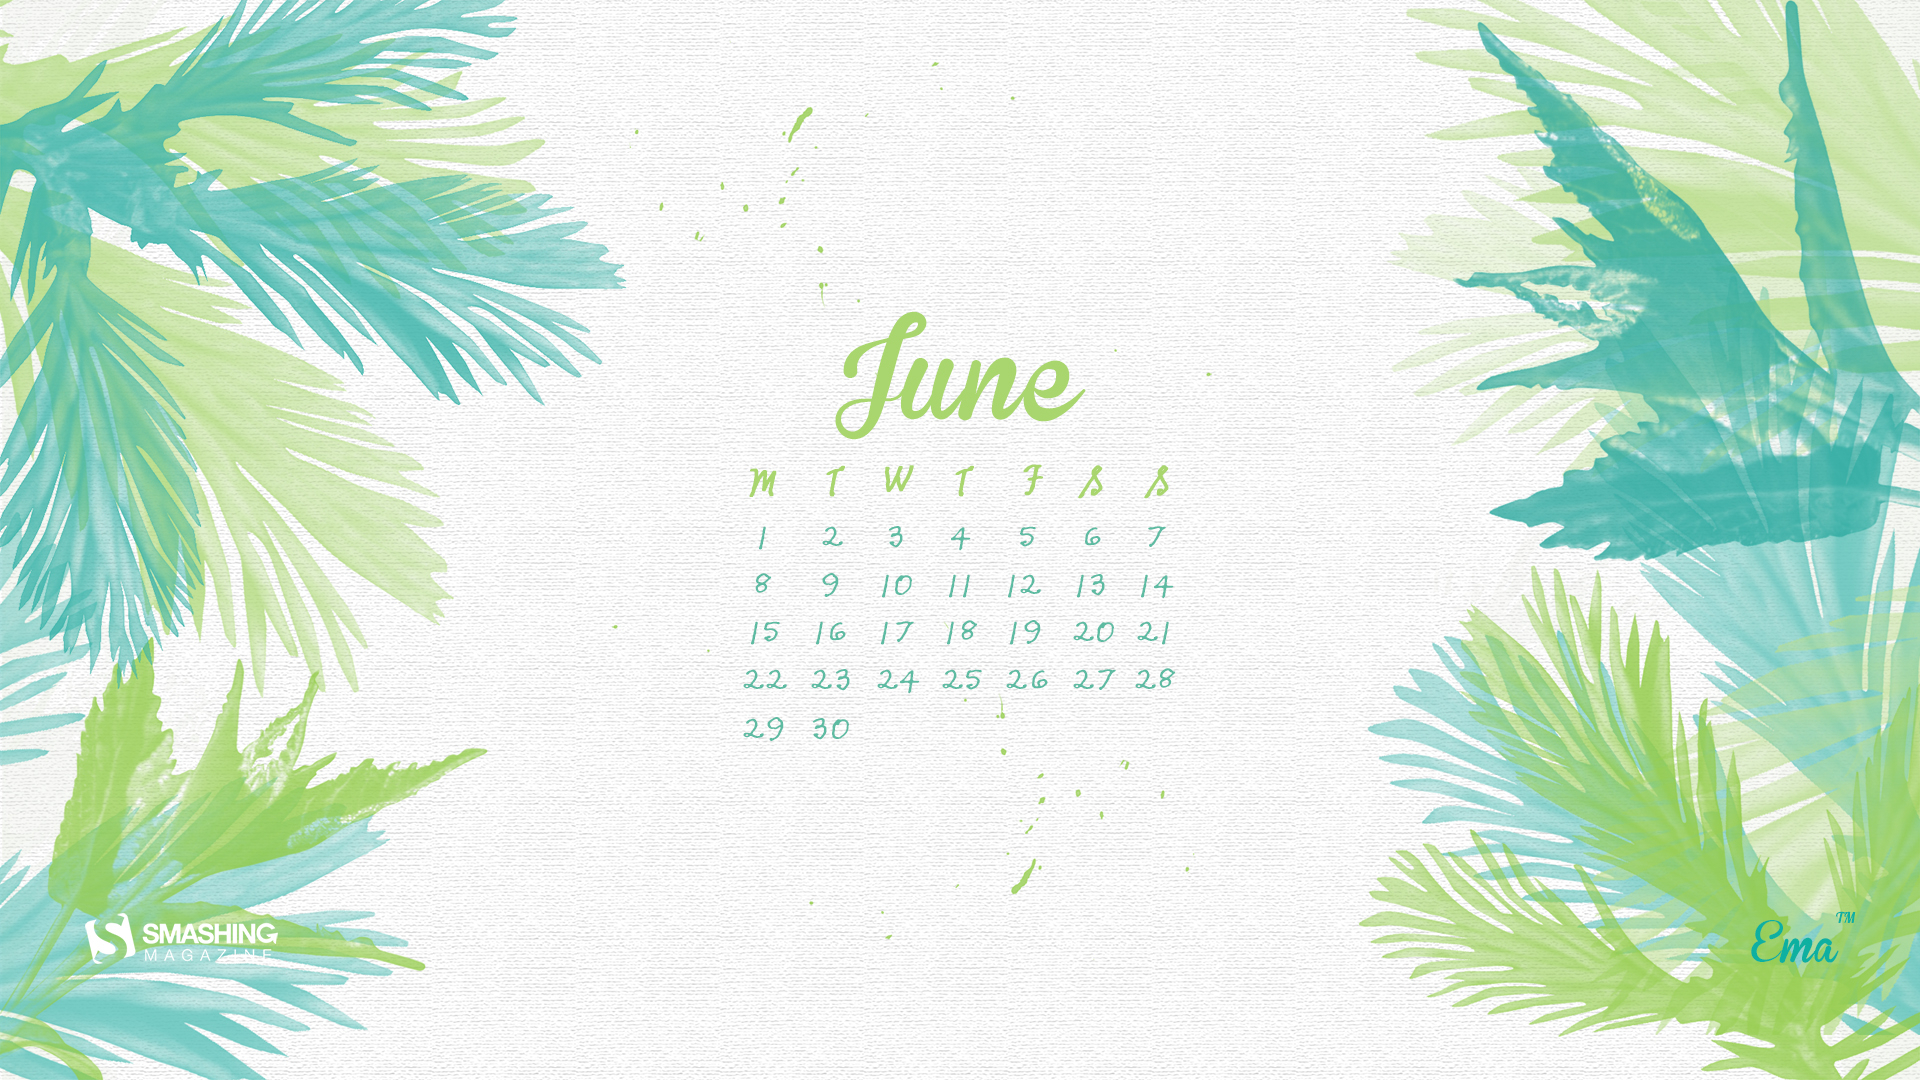 Desktop Wallpaper Calendar  Iunie 2015 Touchofadream for Calendar De Frumusete